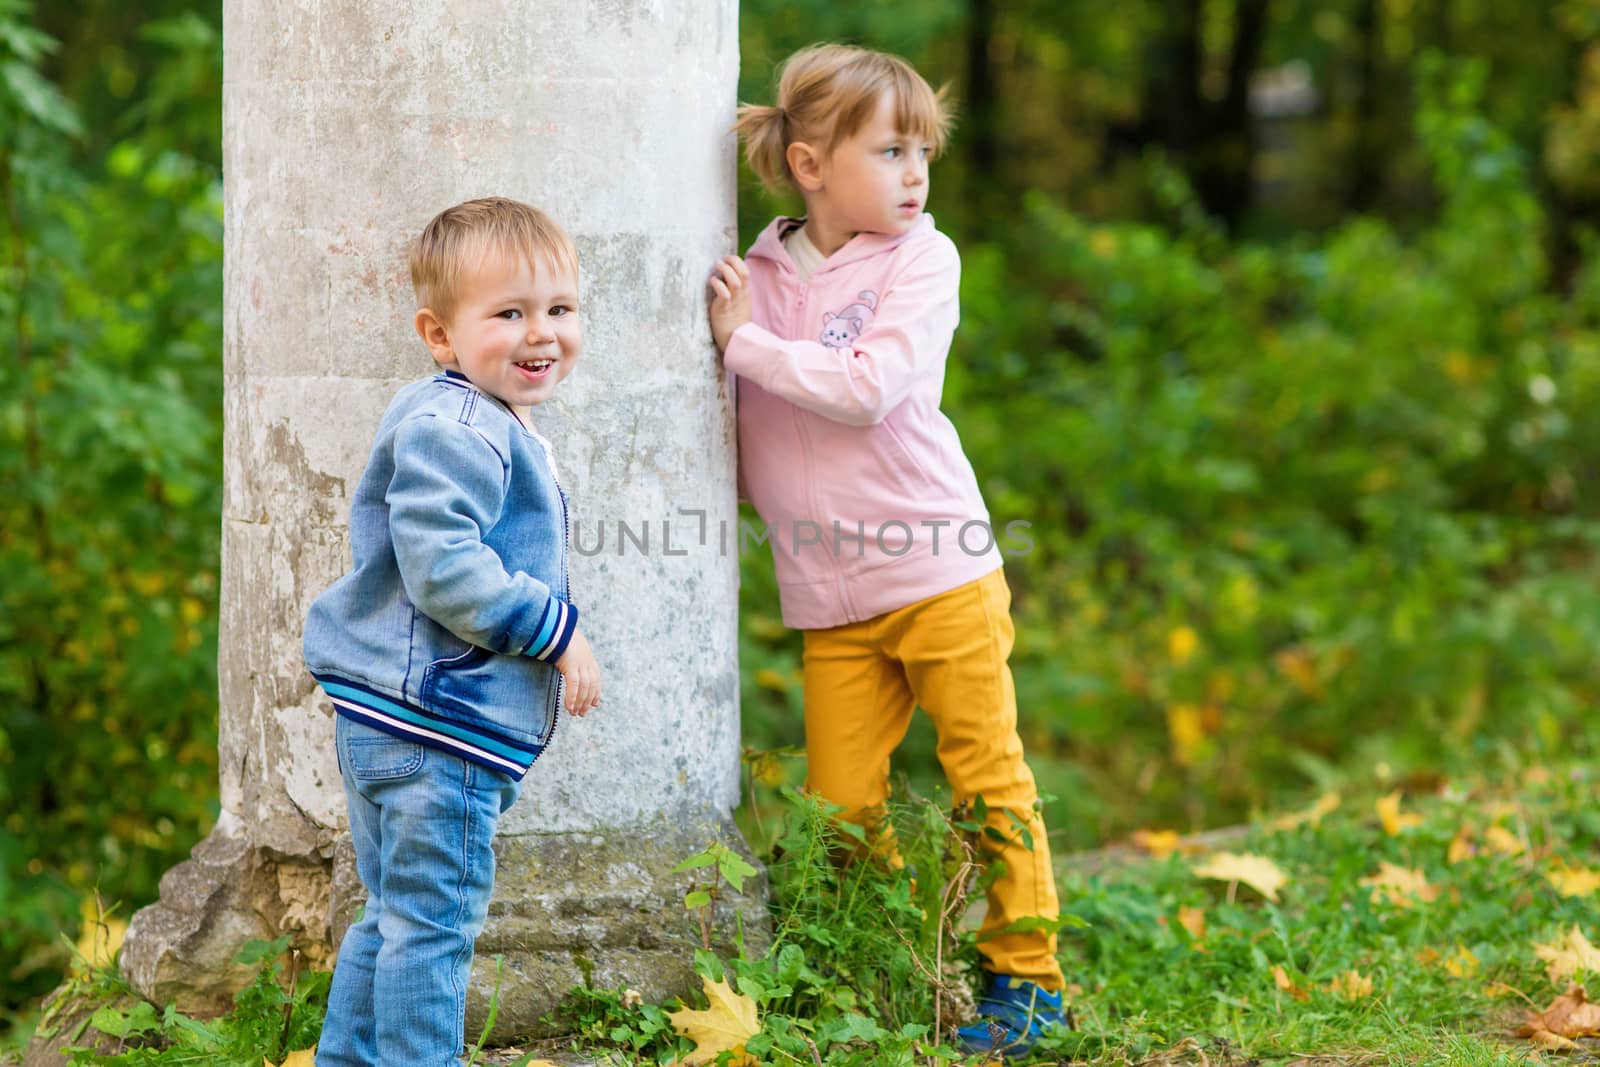 .Children play near the column in the old park on an autumn walk by galinasharapova